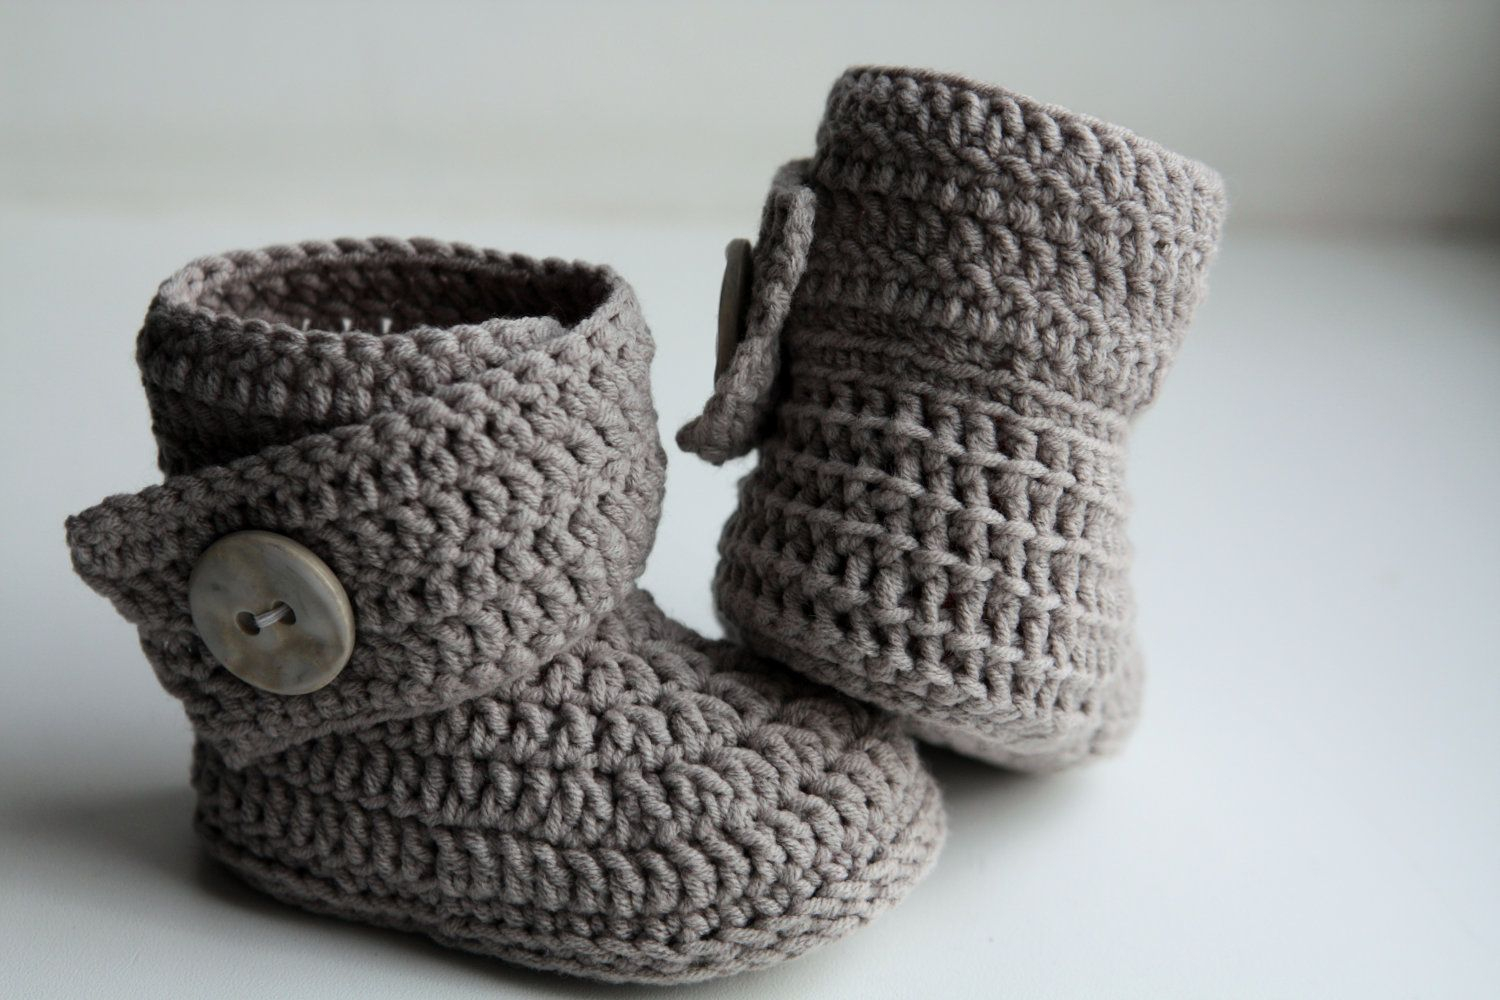 Crochet Pattern For Baby Booties Crochet Ugg Boot Pattern Pdf This Is A Pattern For Crocheted